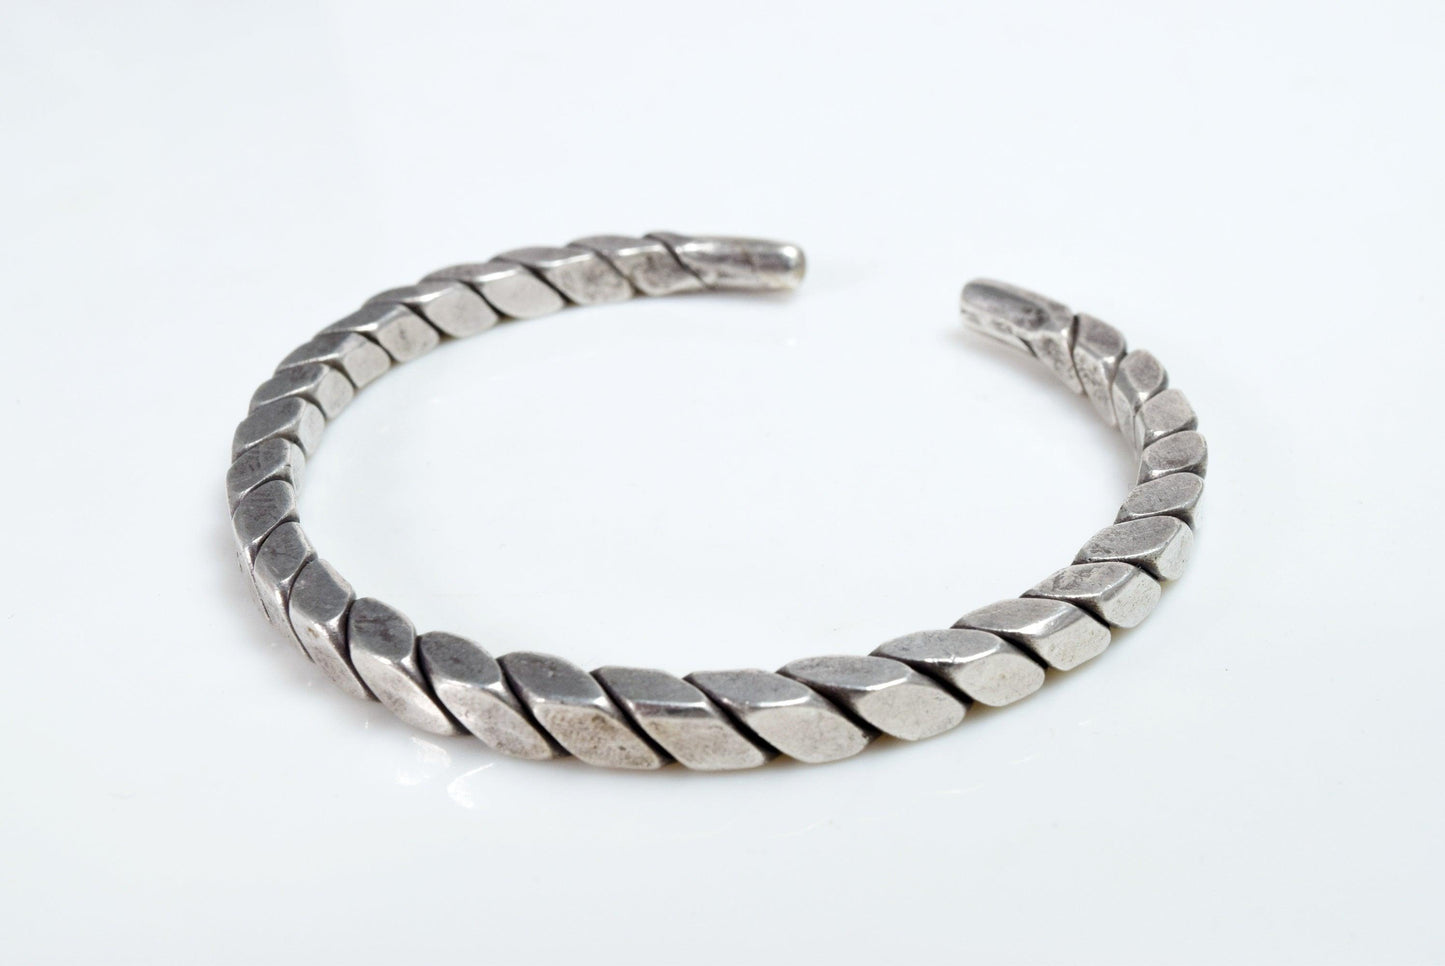 Palestinian twisted silver bracelet